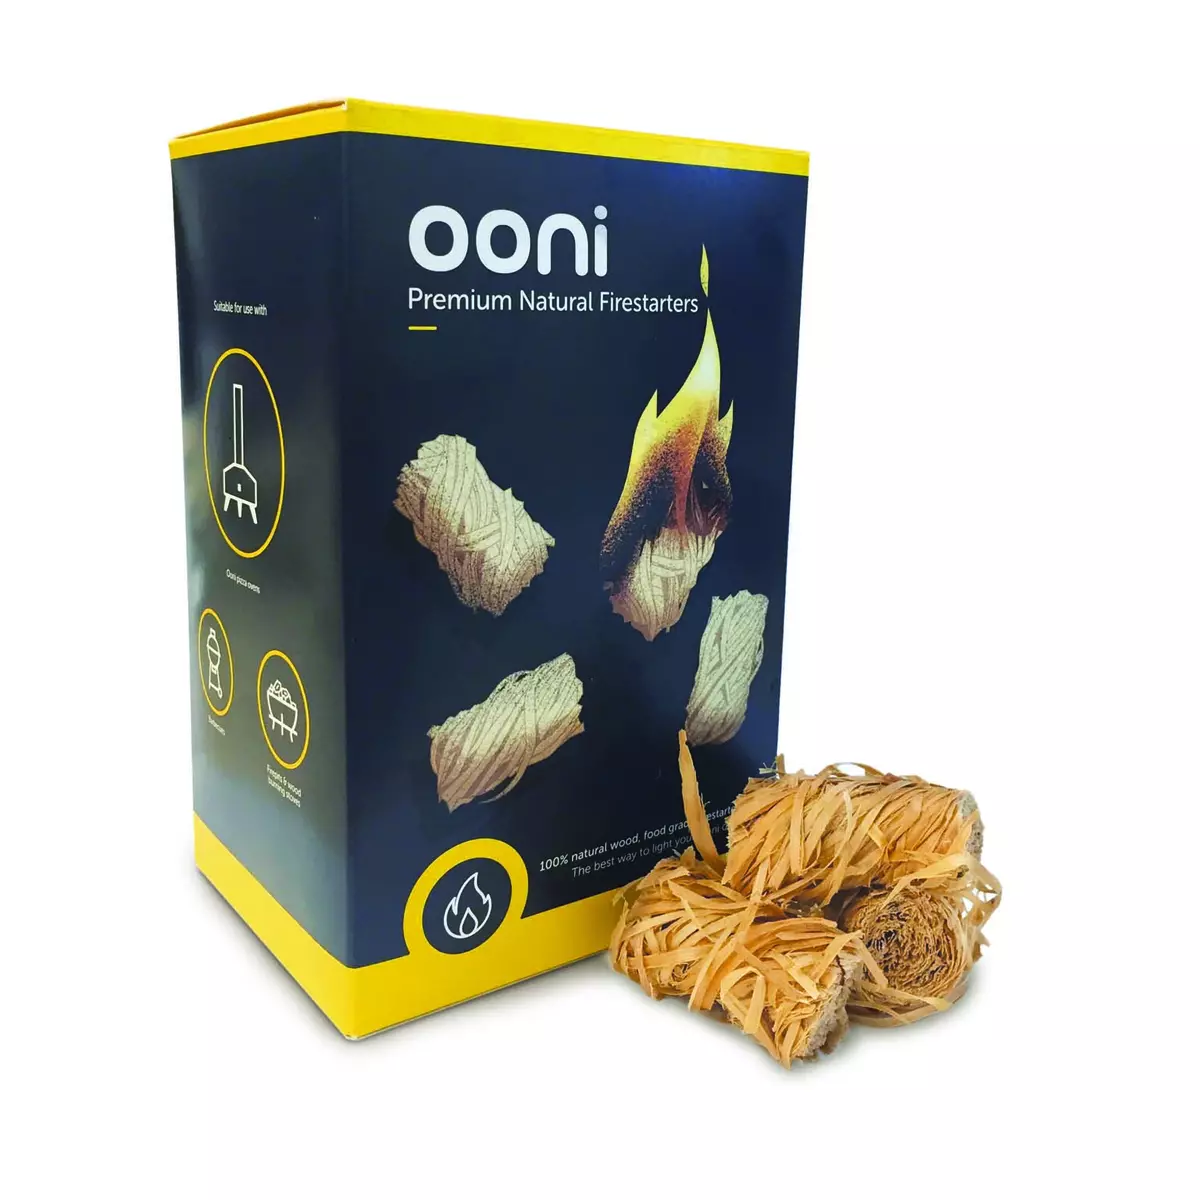 Ooni Premium Natural Firestarters - image 2